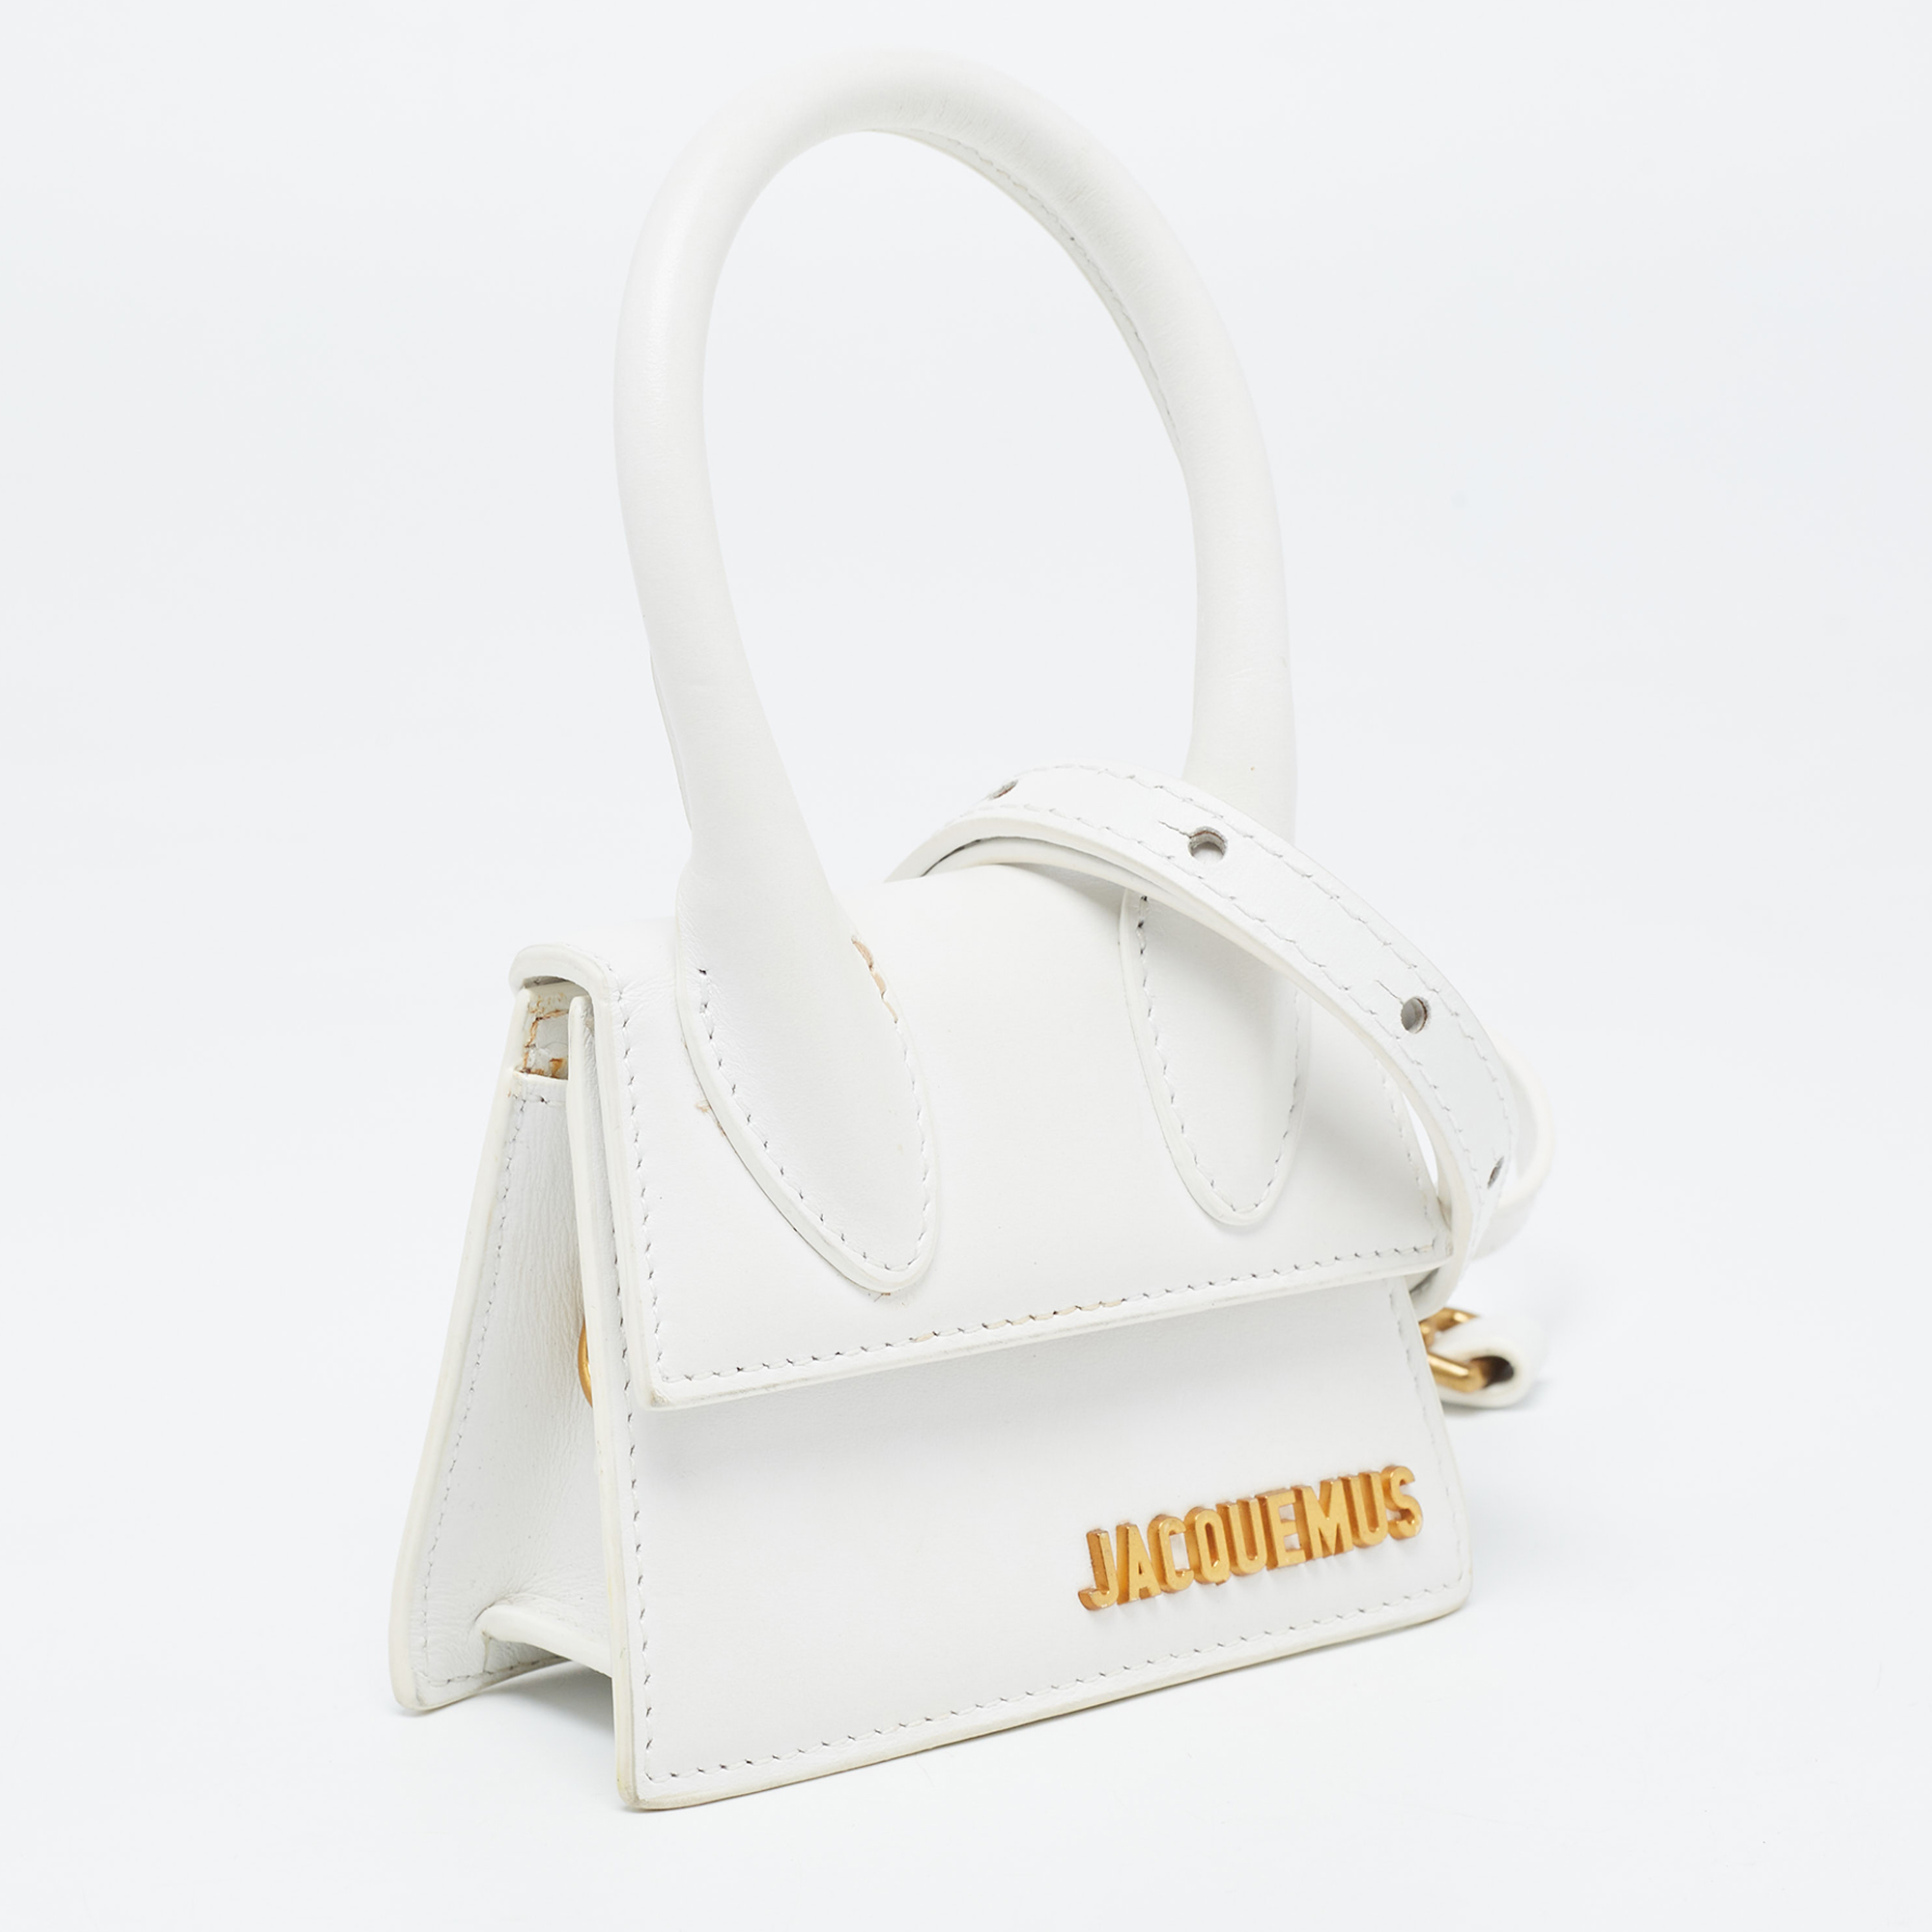 Jacquemus White Leather Mini Le Chiquito Top Handle Bag